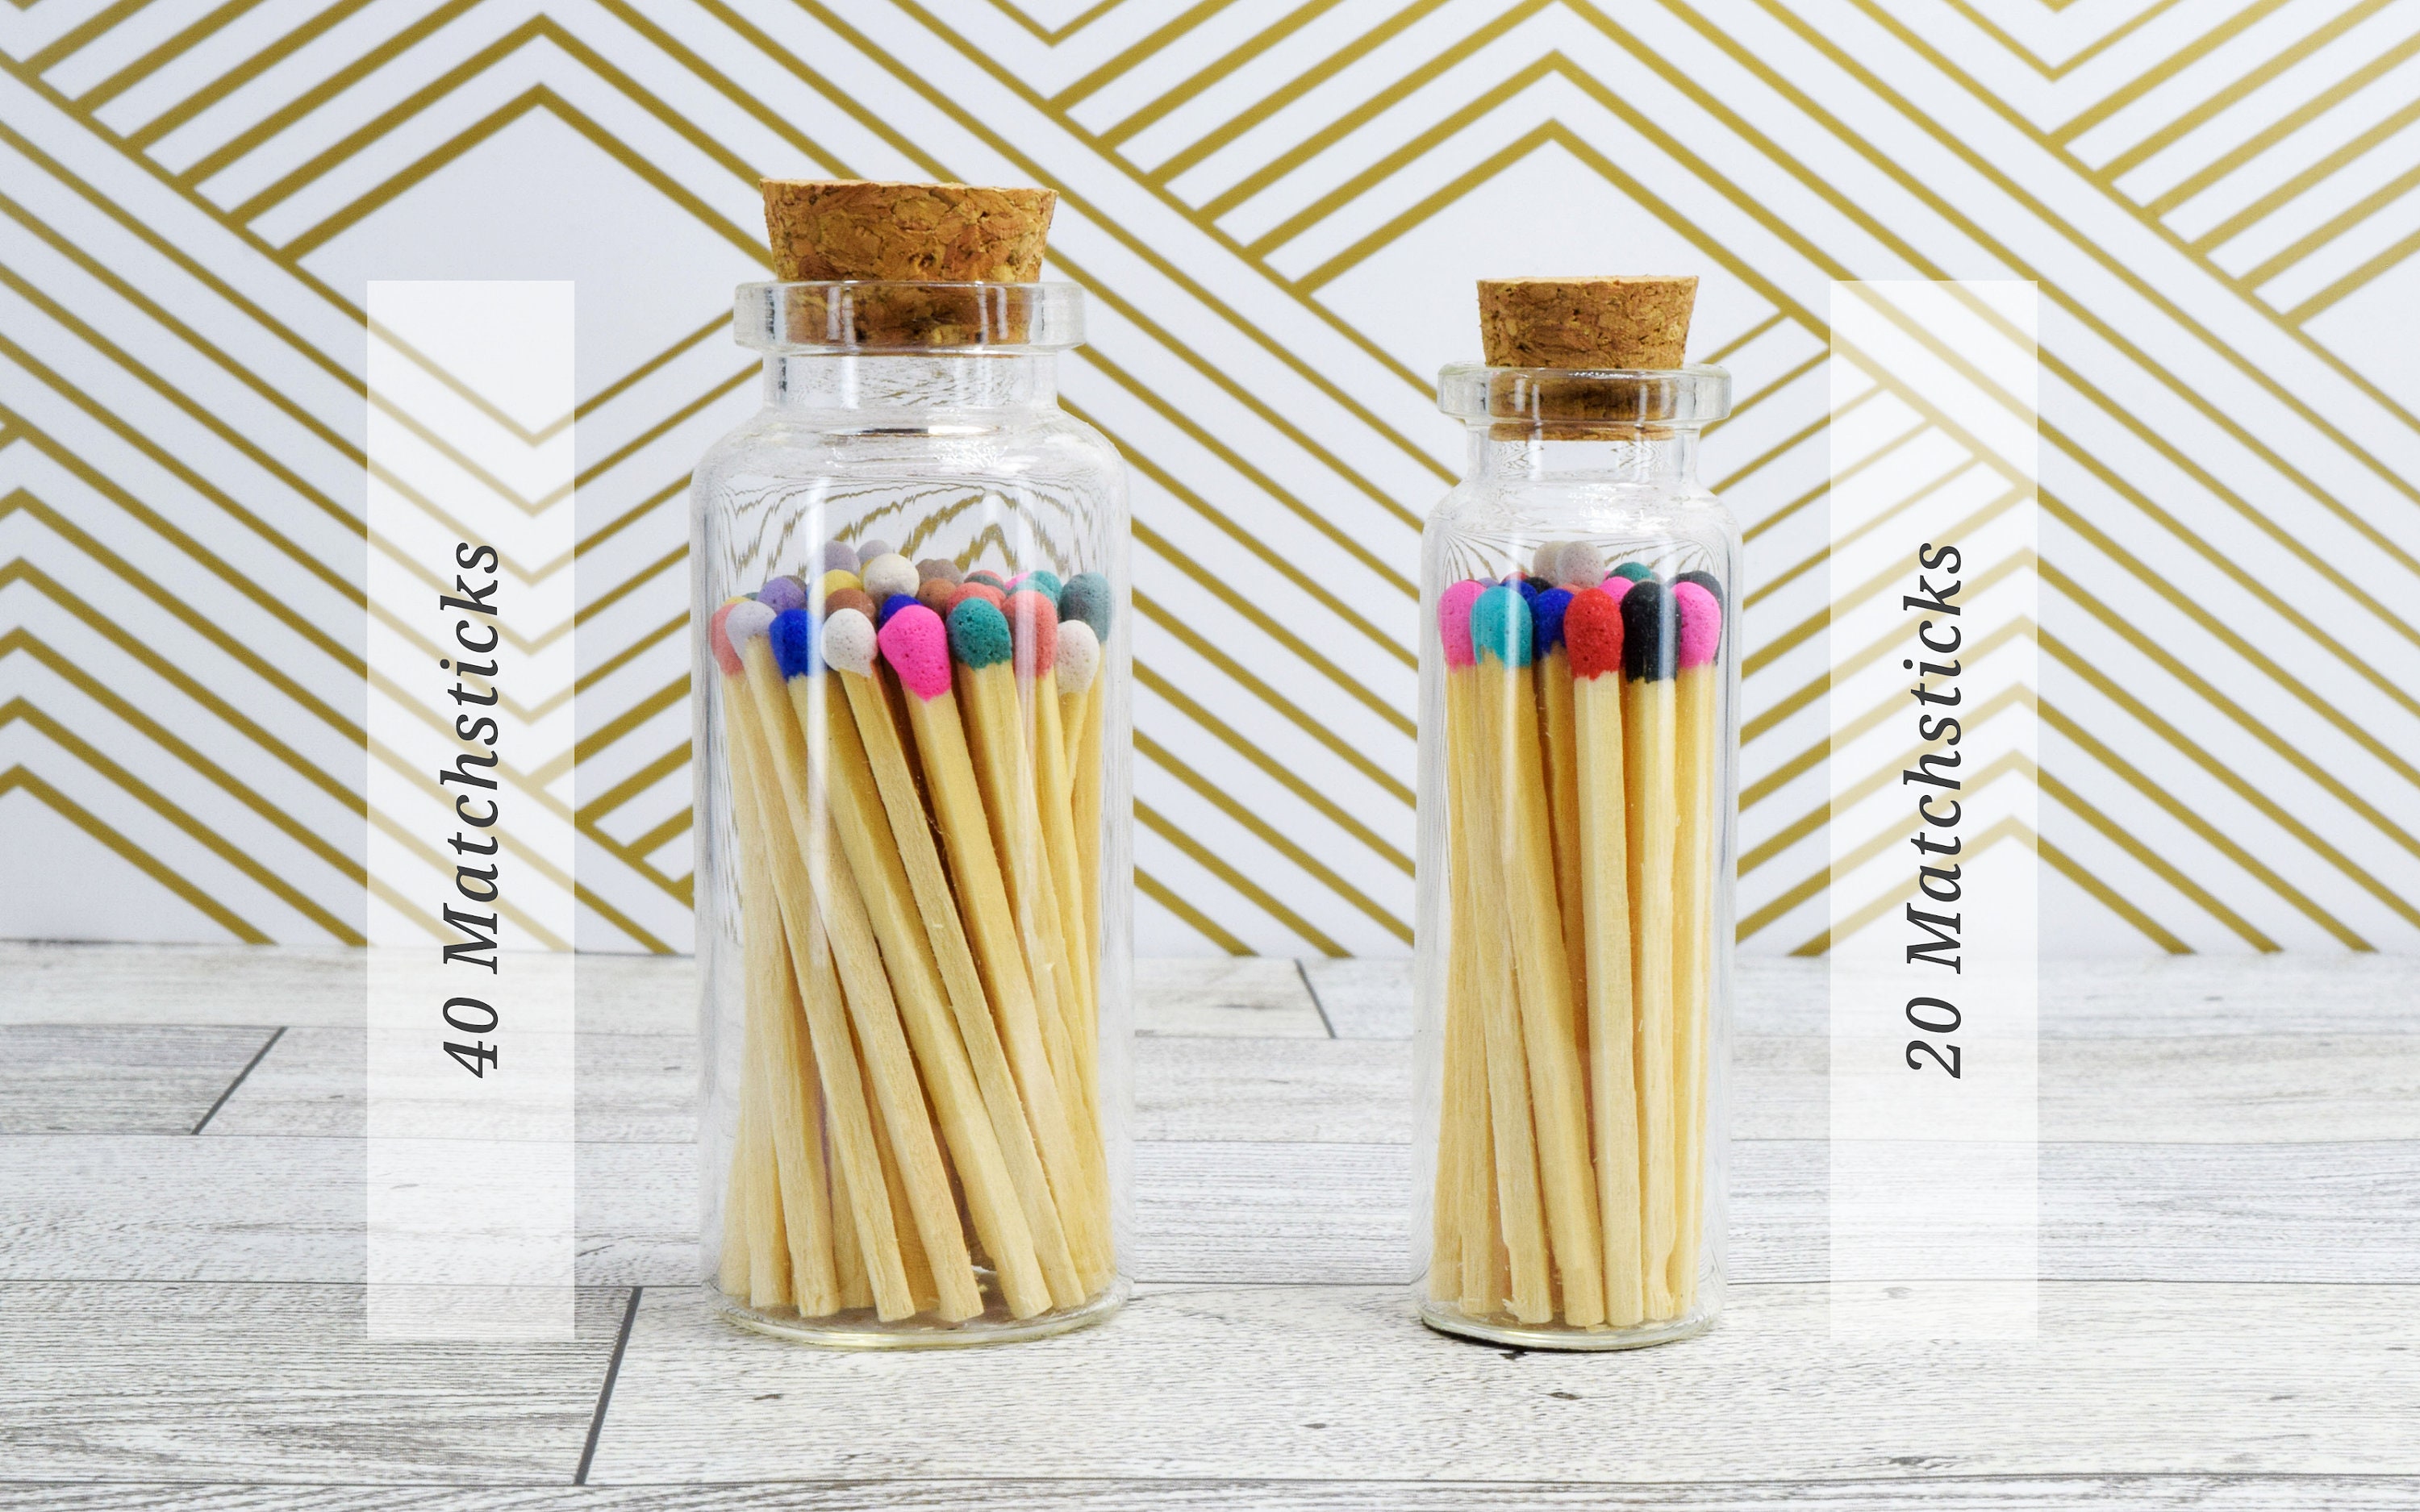 Chandler Studio 2 inch Matchsticks in A Decorative Cork Vial Glass - Matches Bottle Matchsticks - 20 or 40 Matches Bottles 20 Matches Jar / White